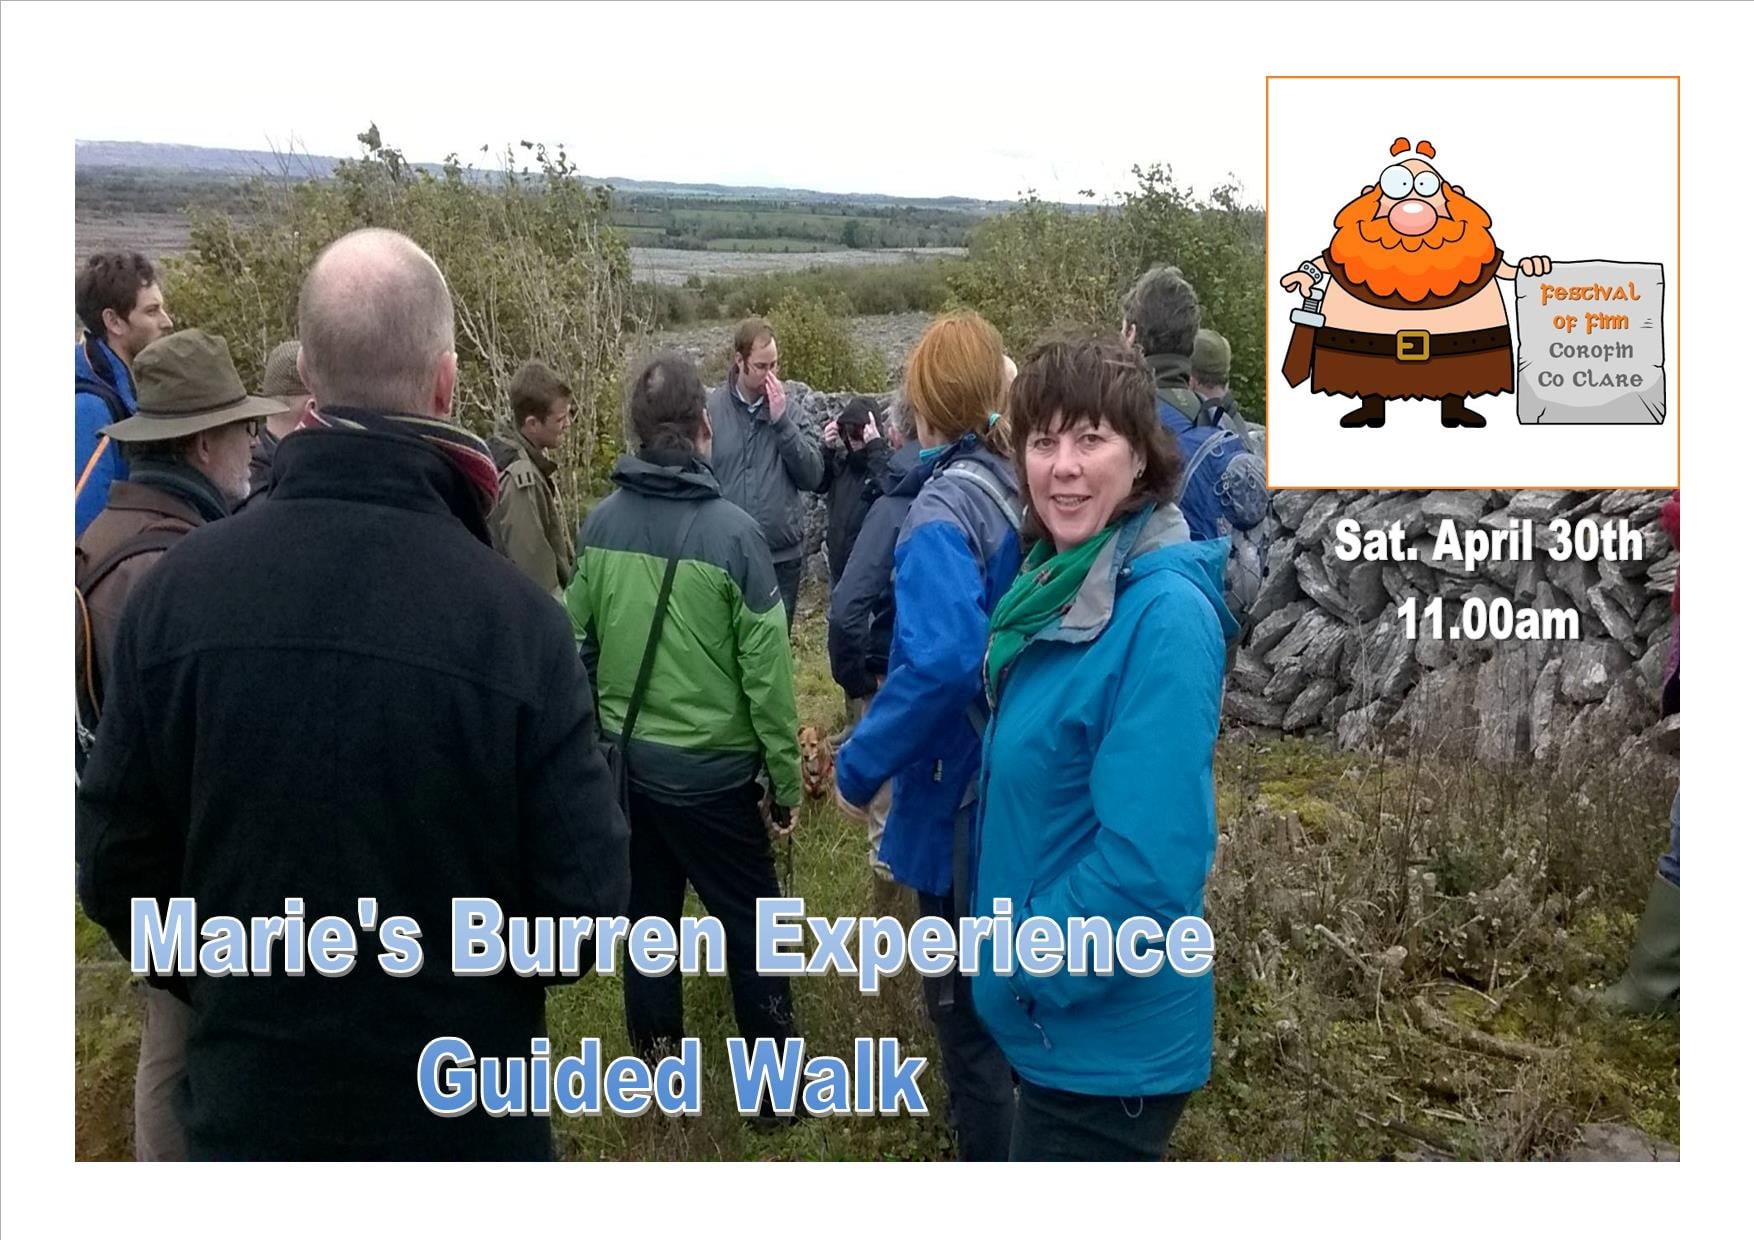 Marie's Burren Experience Guided Walk, Festival of Finn, Corofin 2022